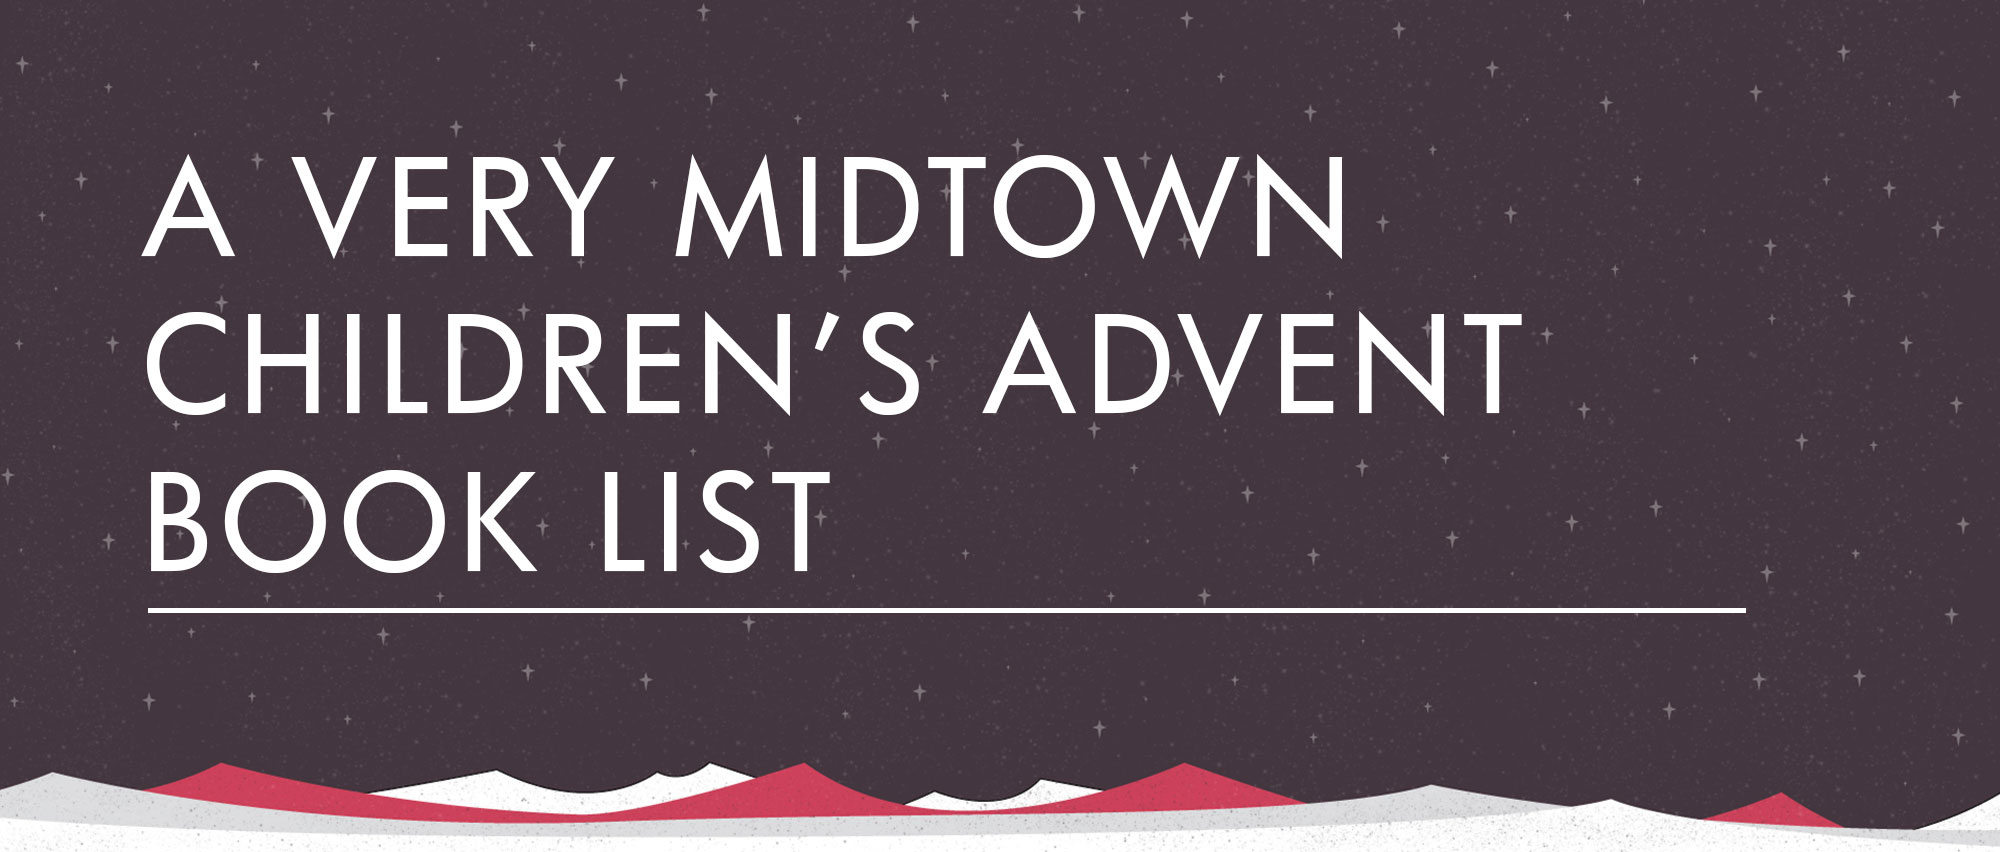 Giv_BlogHeader_A-Very-Midtown-Childrens-Advent--Book-List.jpg